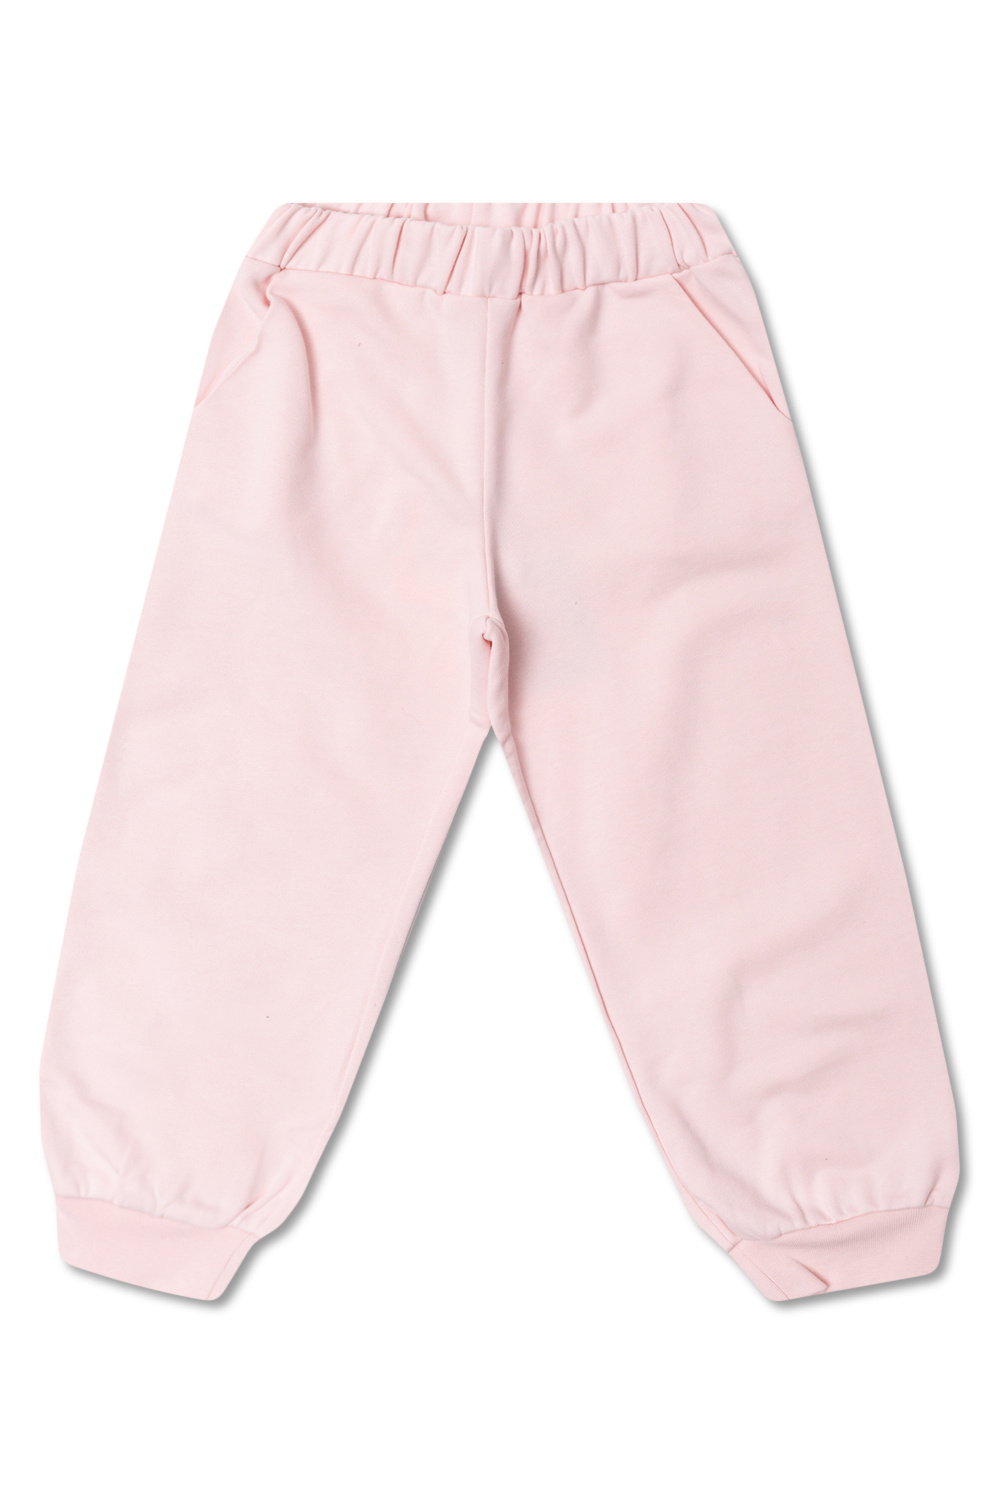 fendi-girls-pink-pequin-stroller-115950